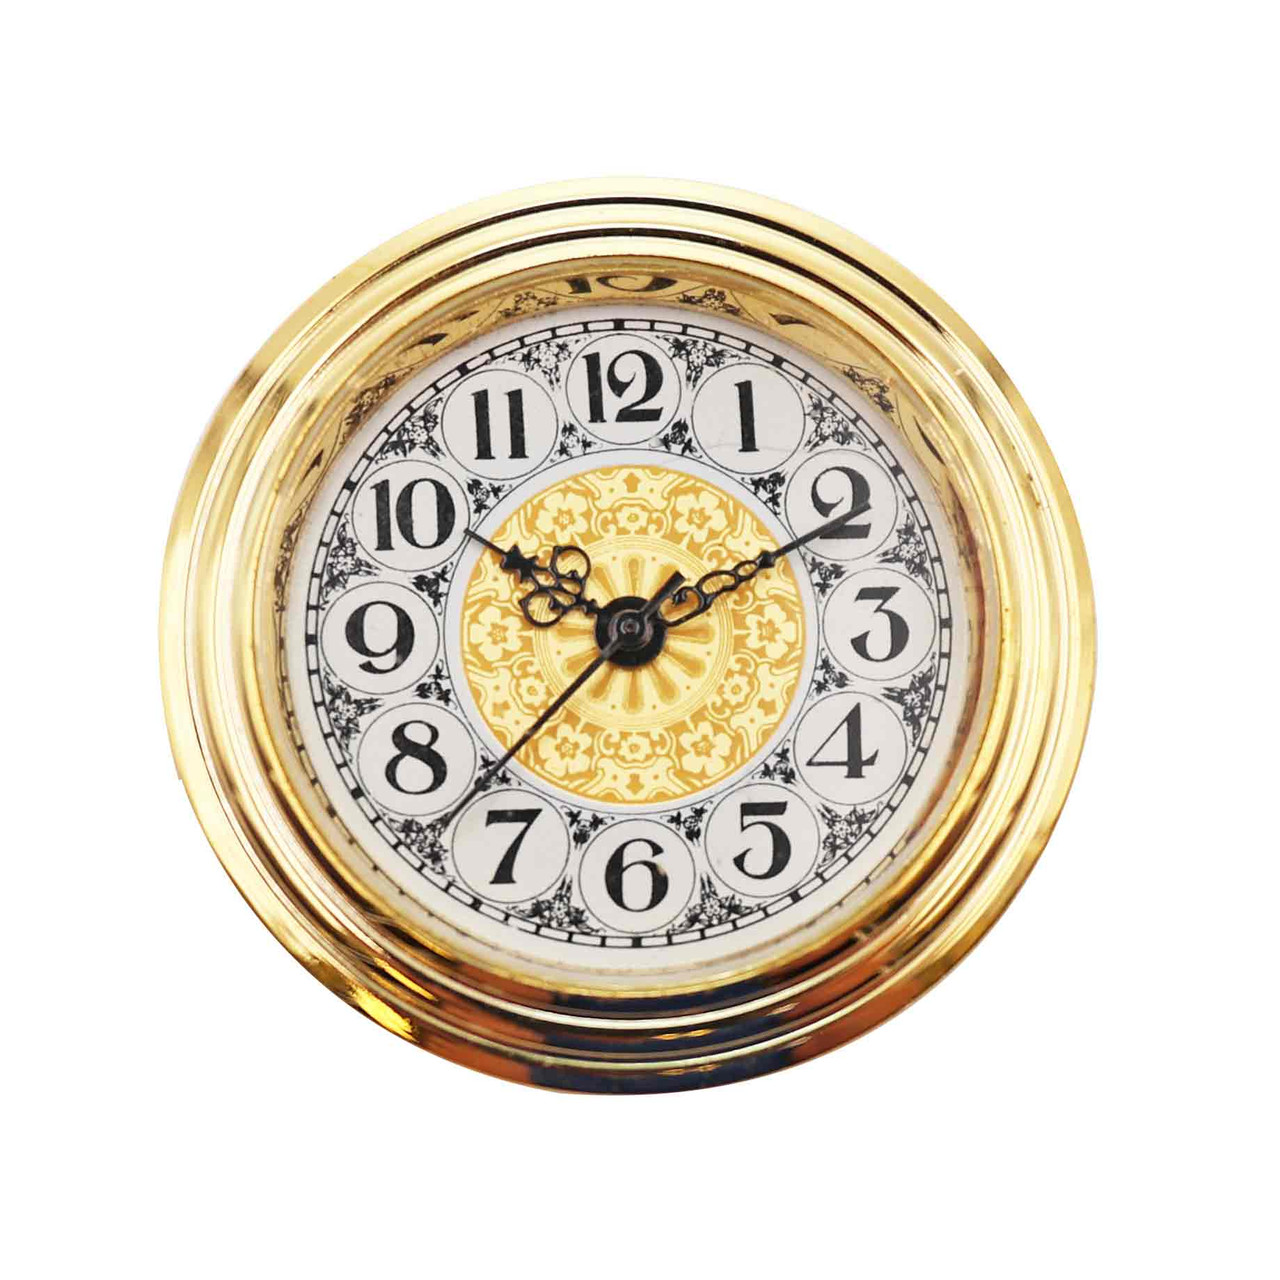 16 Wooden Ship Wheel (8 Clock) - (Yellow Roman Dial) 